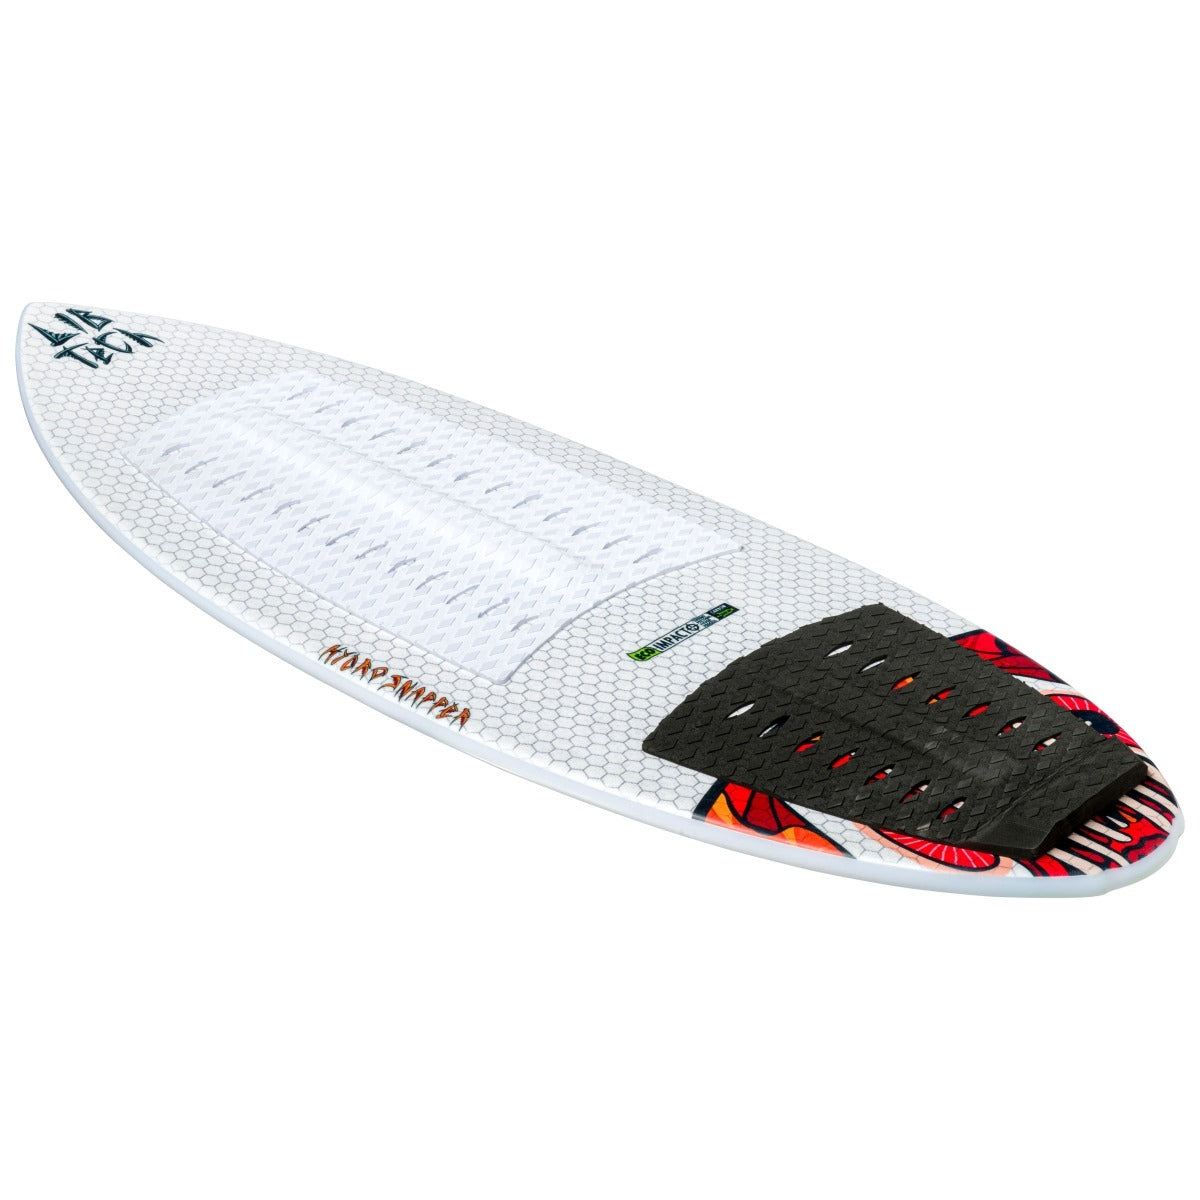 4'7" Lib Tech Hydro Snapper Skim Wakesurf Board